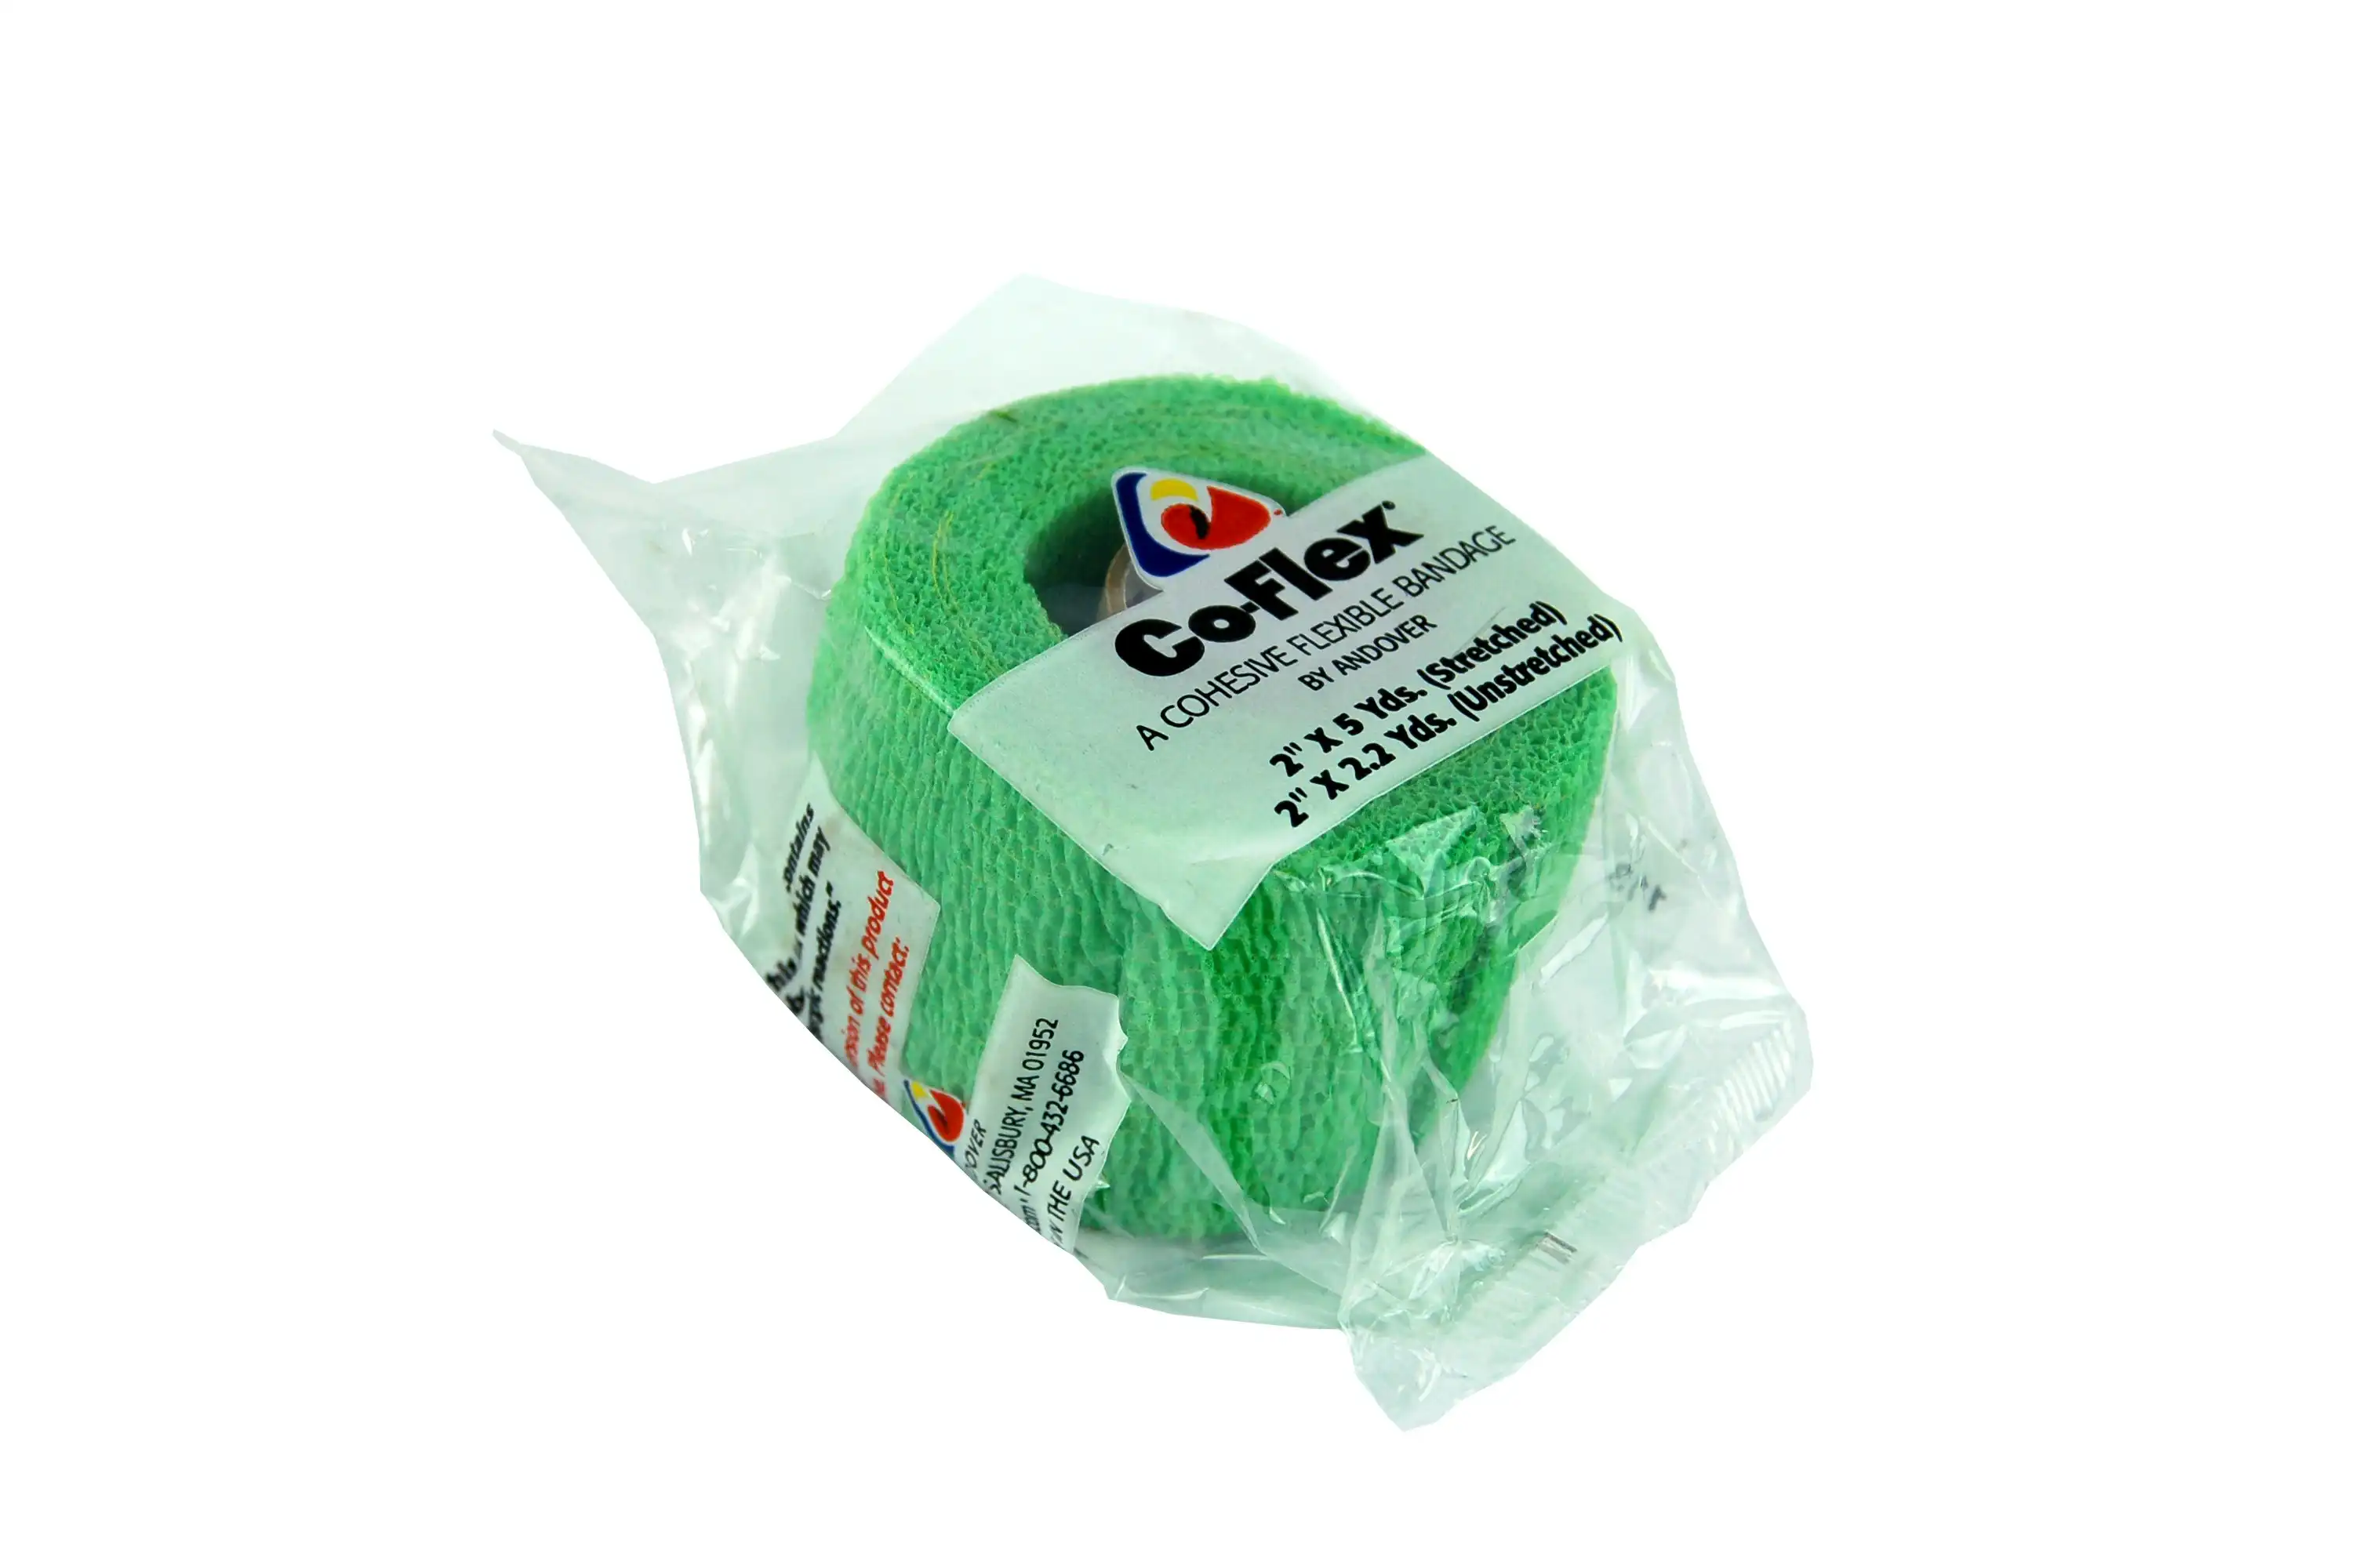 E.Z. Ban Wrap Cohesive Elastic Bandage 5cm x 2m stretch to 4.5m Neon Green